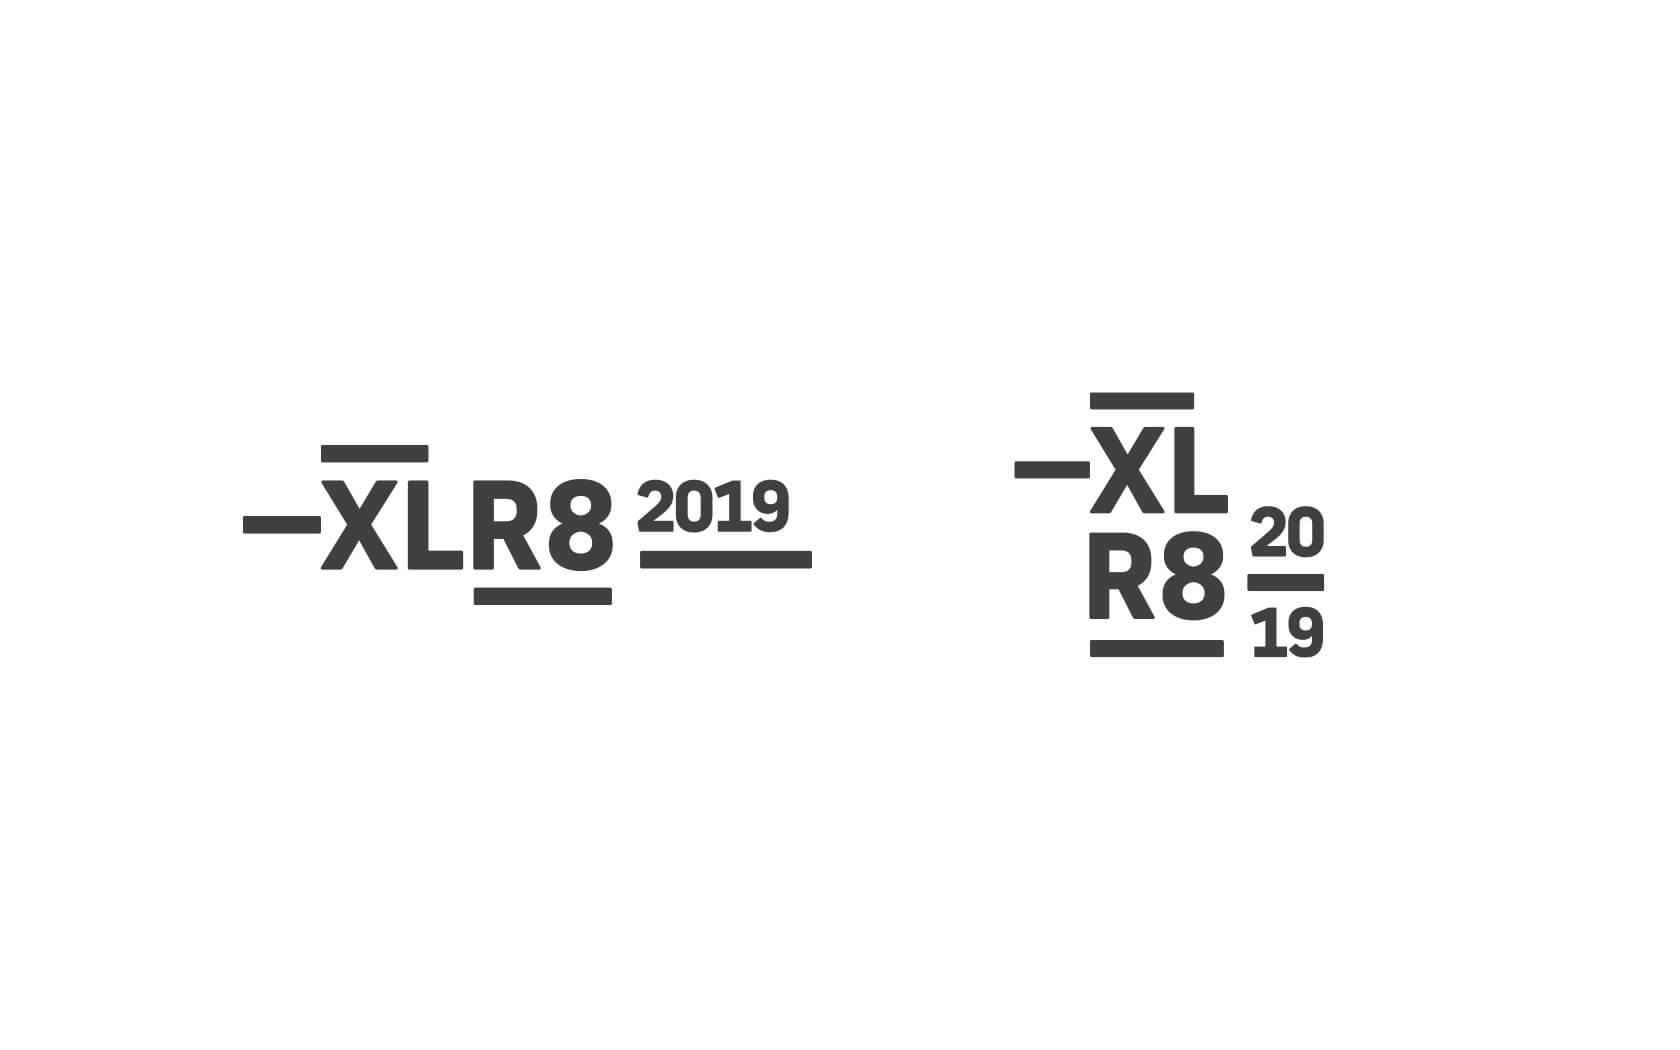 XLR8. Brand logo in horizontal and vertical lockup version